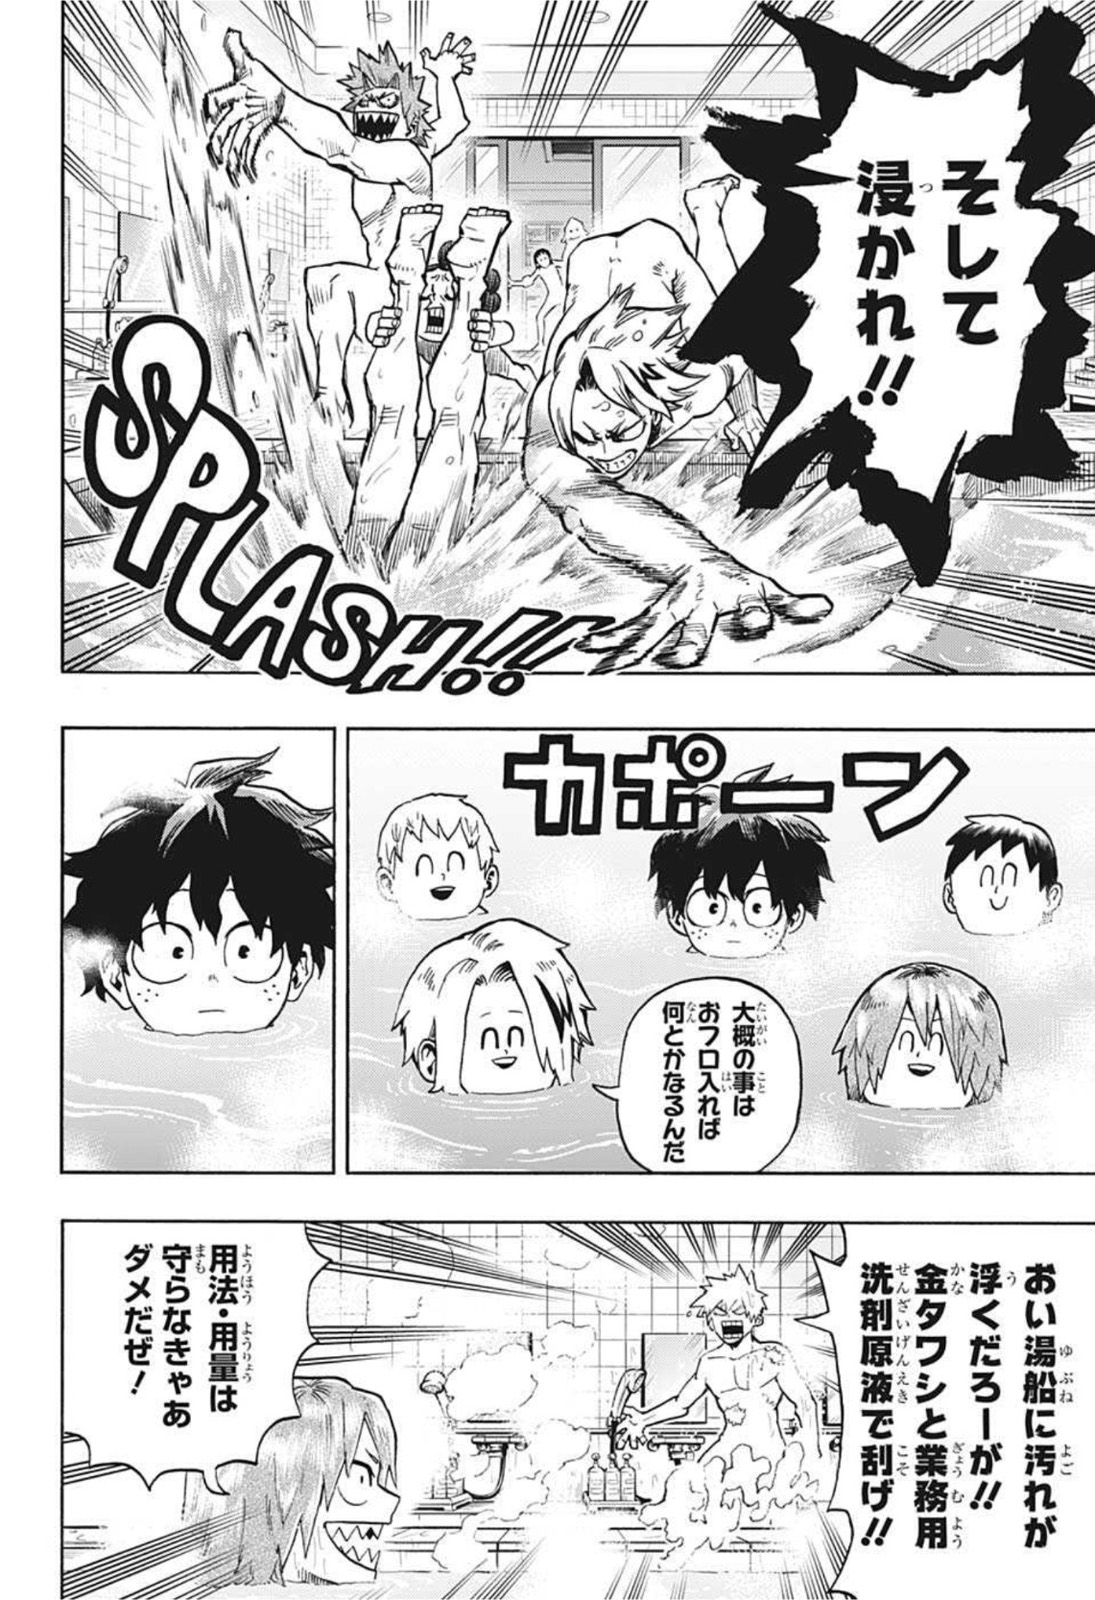 Boku no Hero Academia - Chapter 327 - Page 2